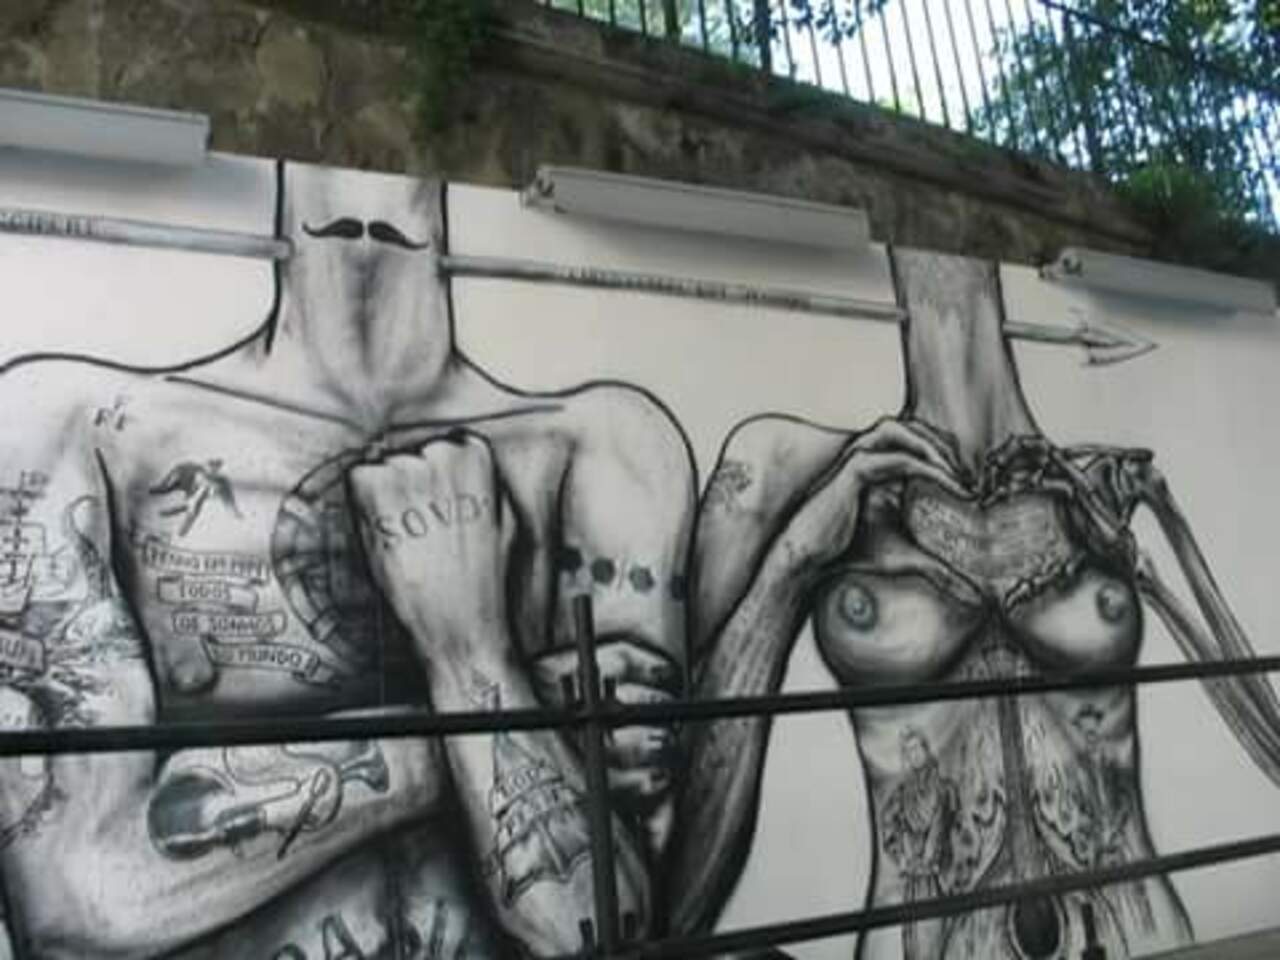 #amazing and #crative #streetart . #inspirational #love #art #city #graffiti #lisbon #walls #craftsatelier #travel http://t.co/Rdw1QzY8RJ